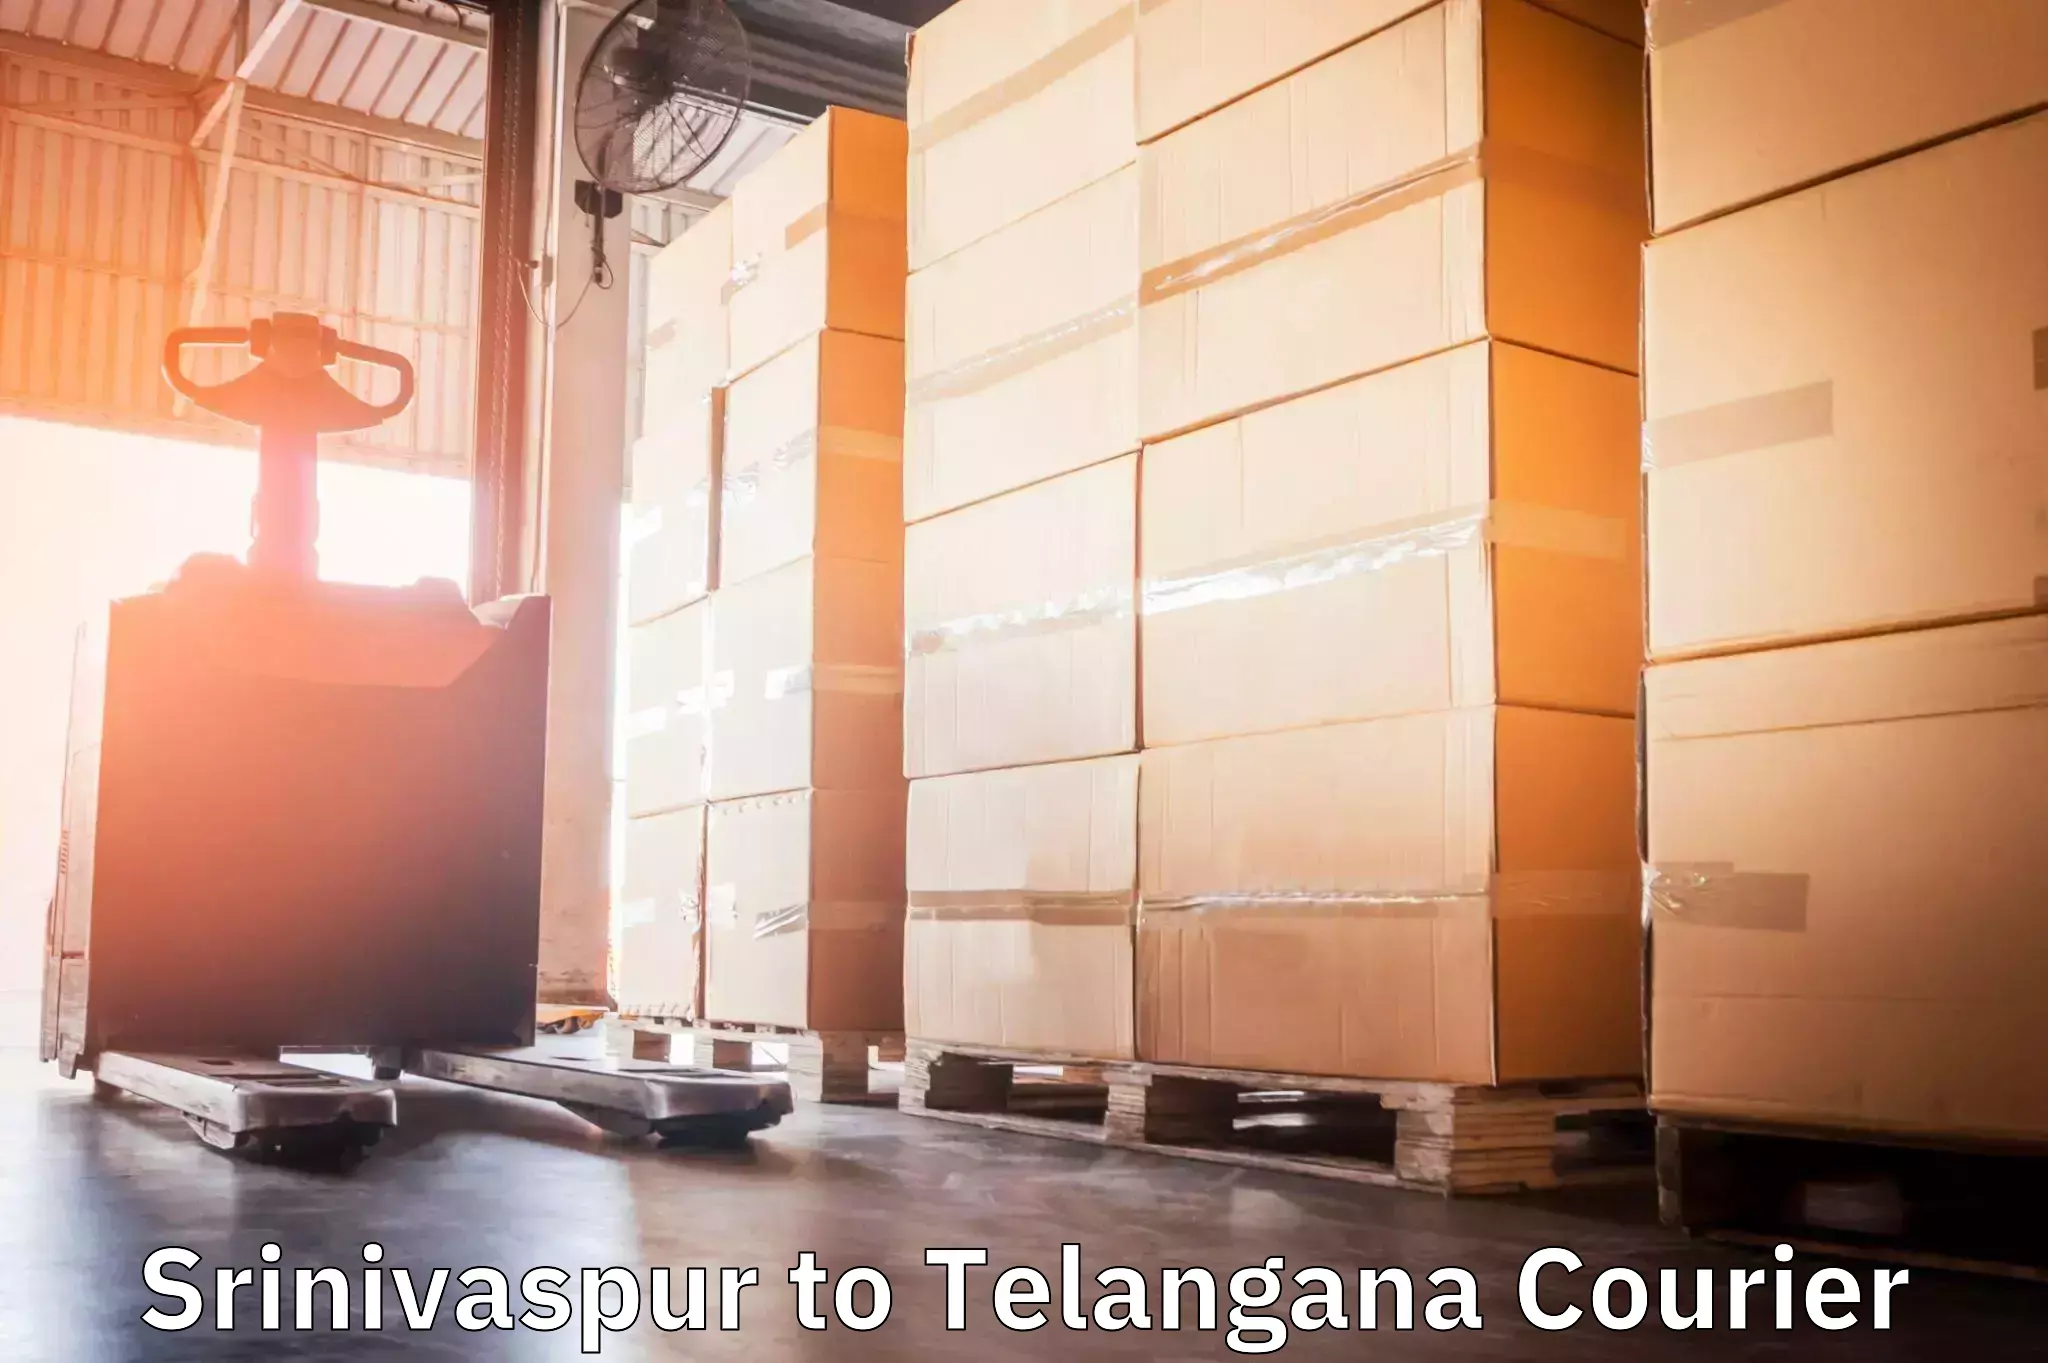 Courier service partnerships Srinivaspur to Bellampalli